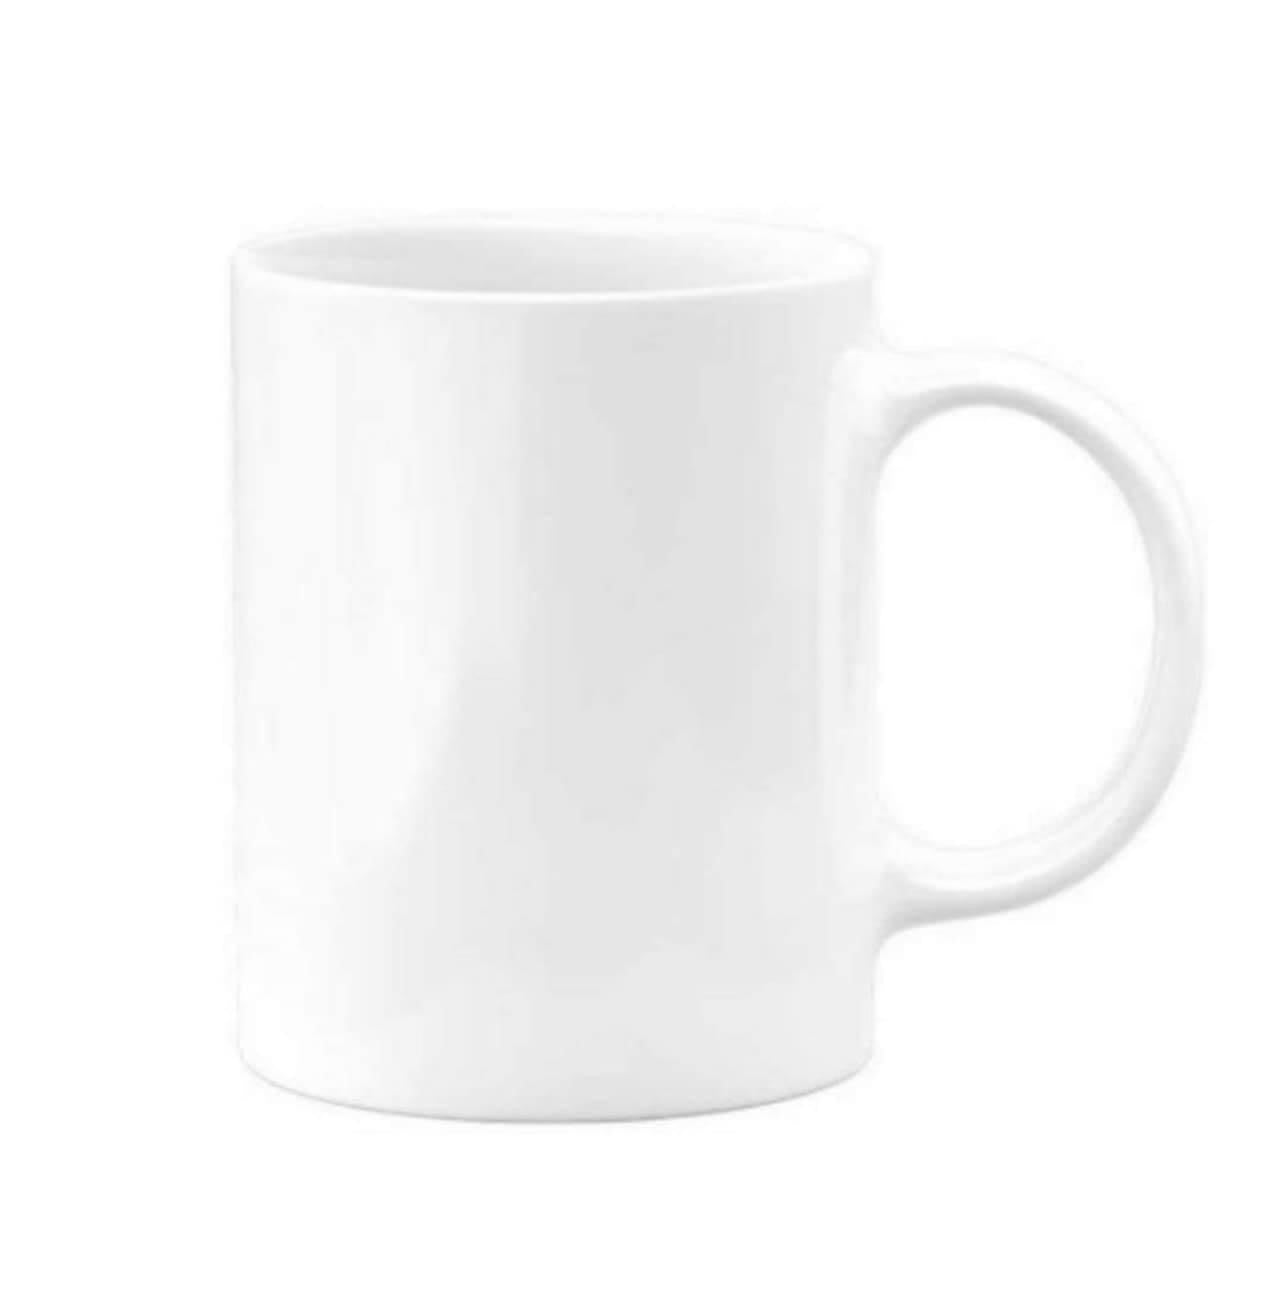 11 oz Ceramic Mug